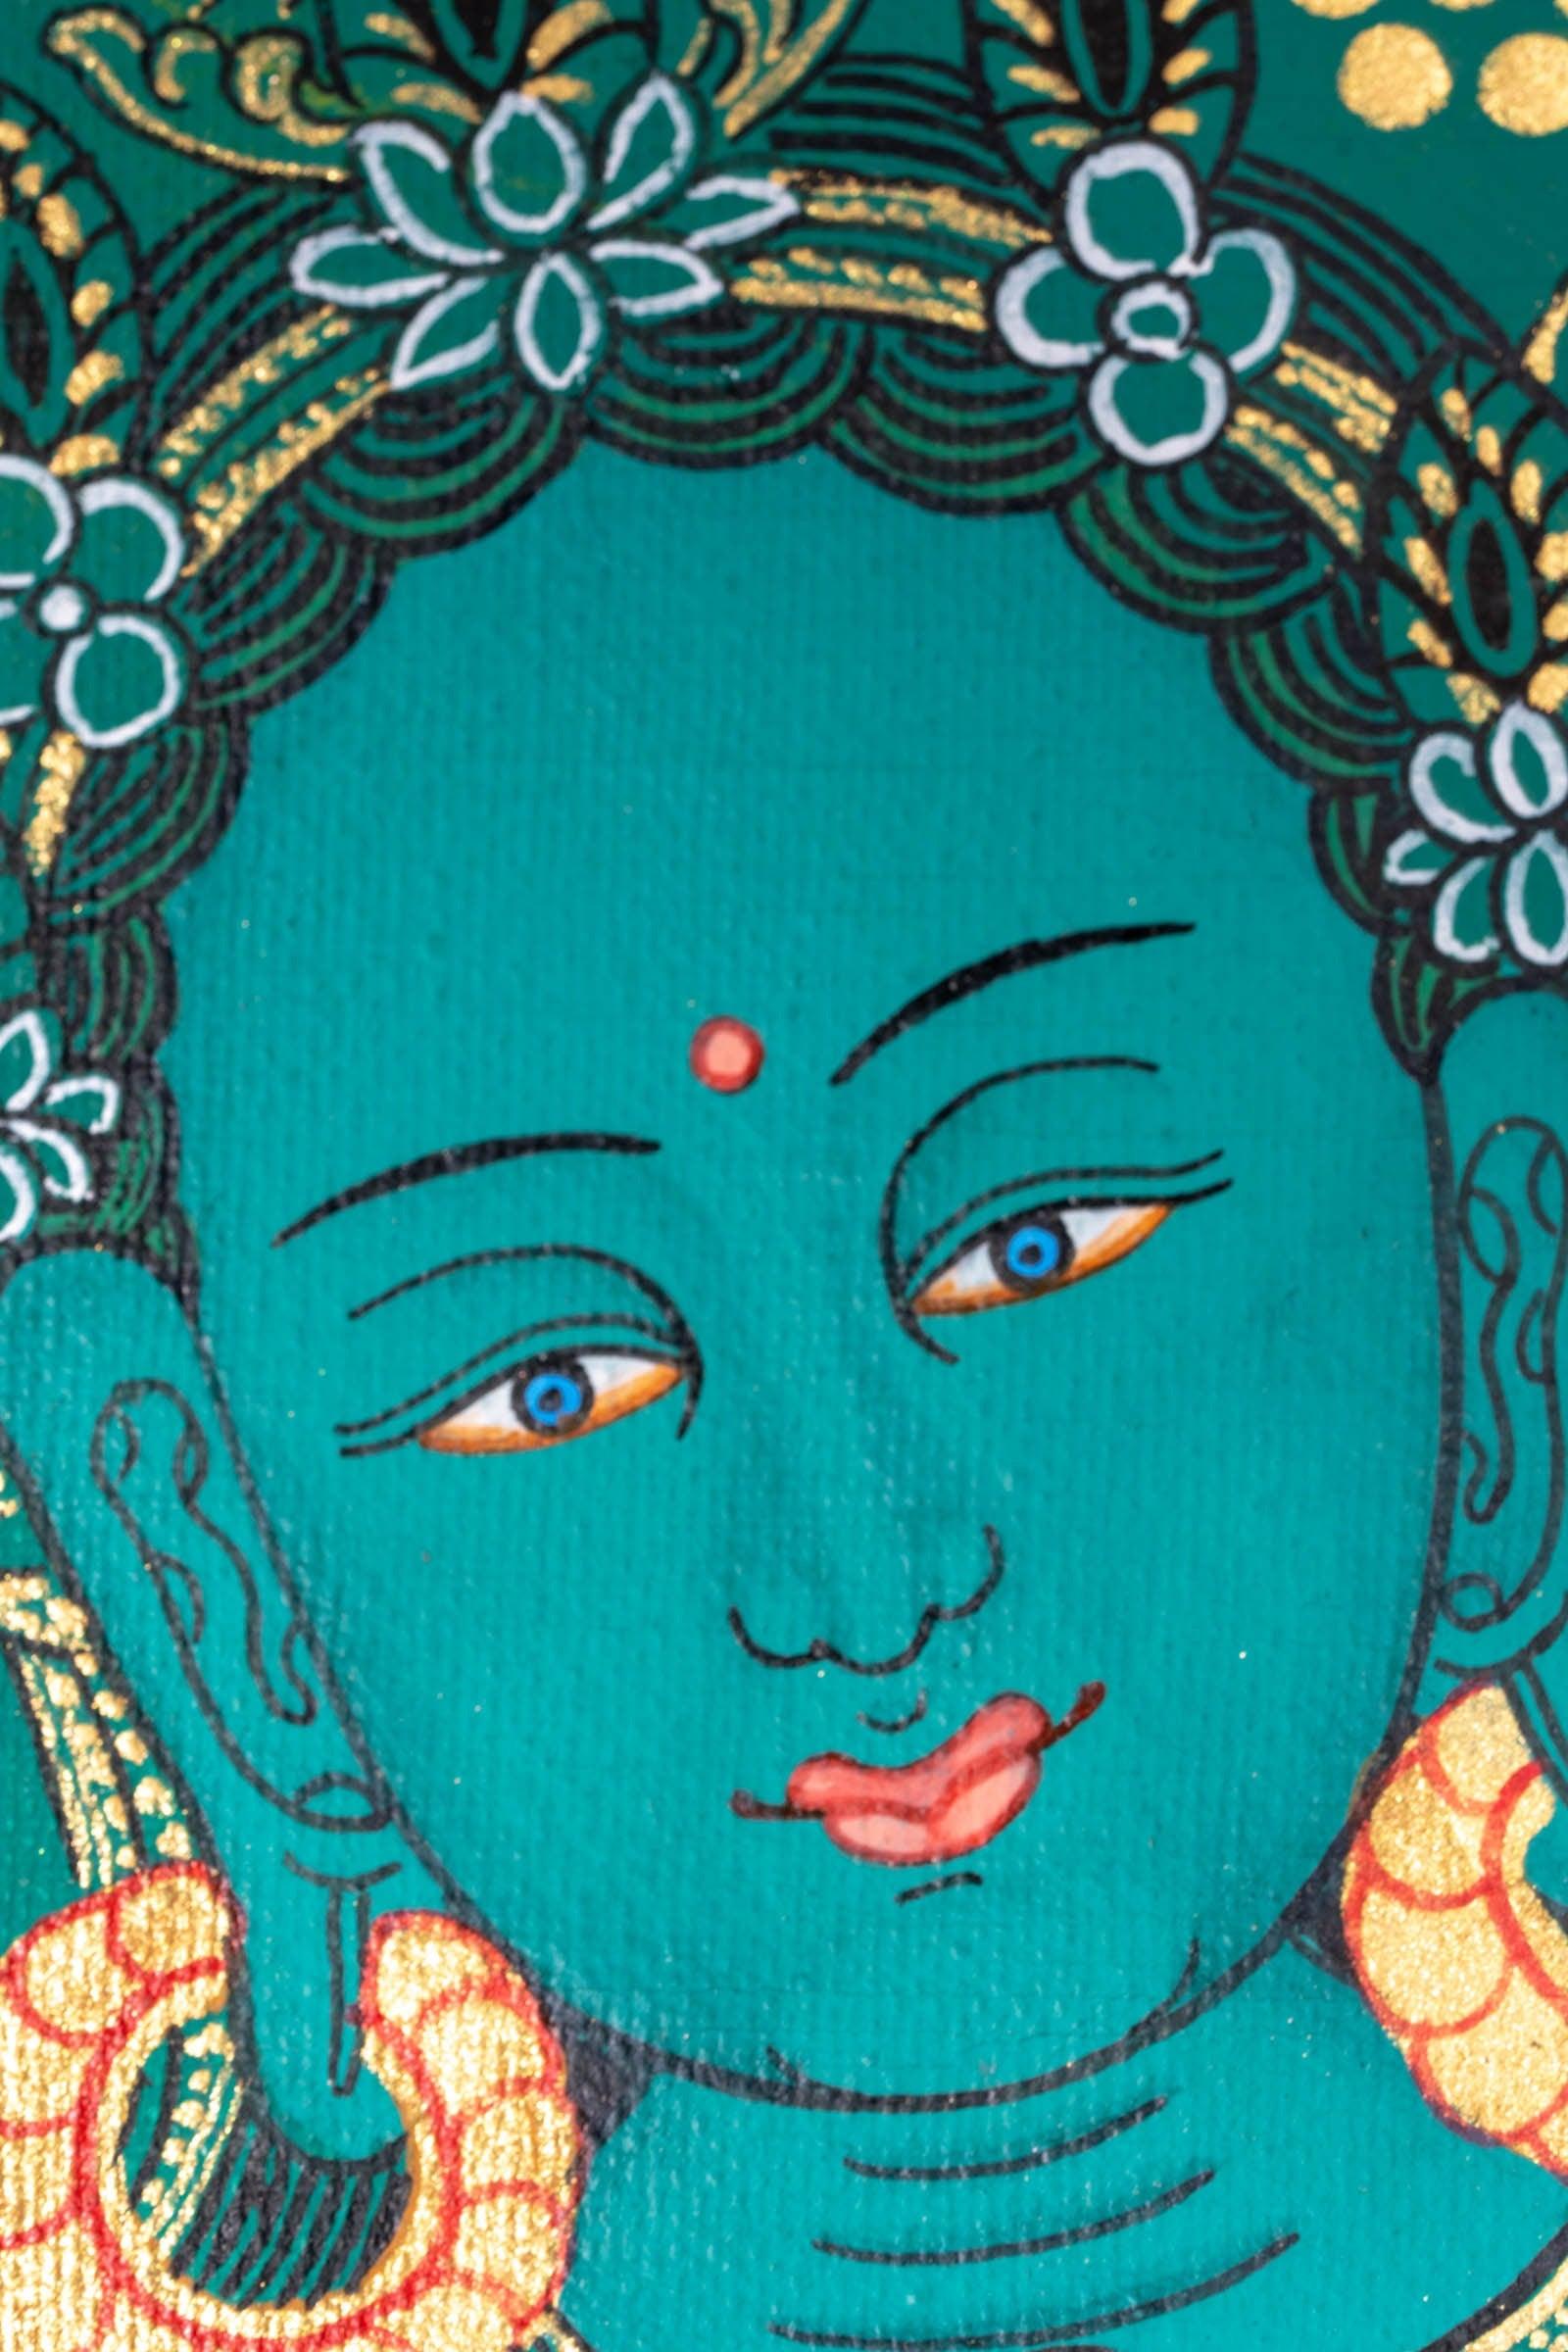 21 Green Tara Thangka Painting - Himalayas Shop